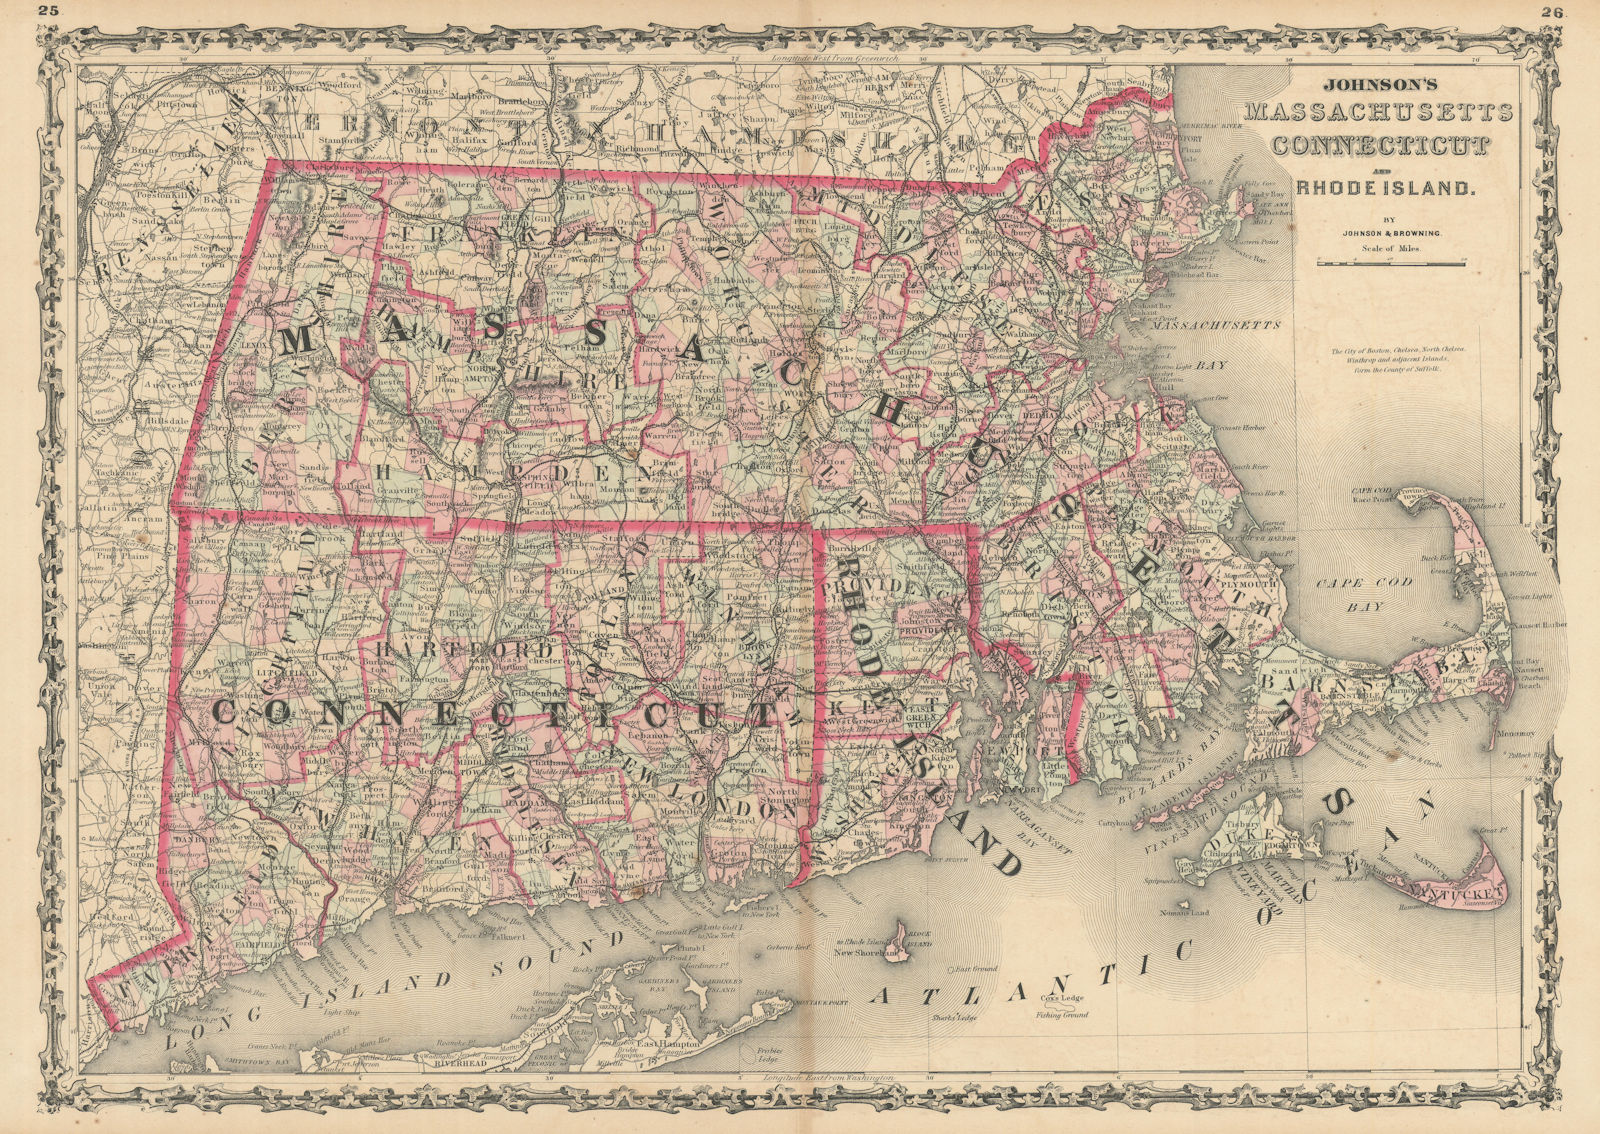 Associate Product Johnson's Massachusetts, Connecticut & Rhode Island. New England 1861 old map